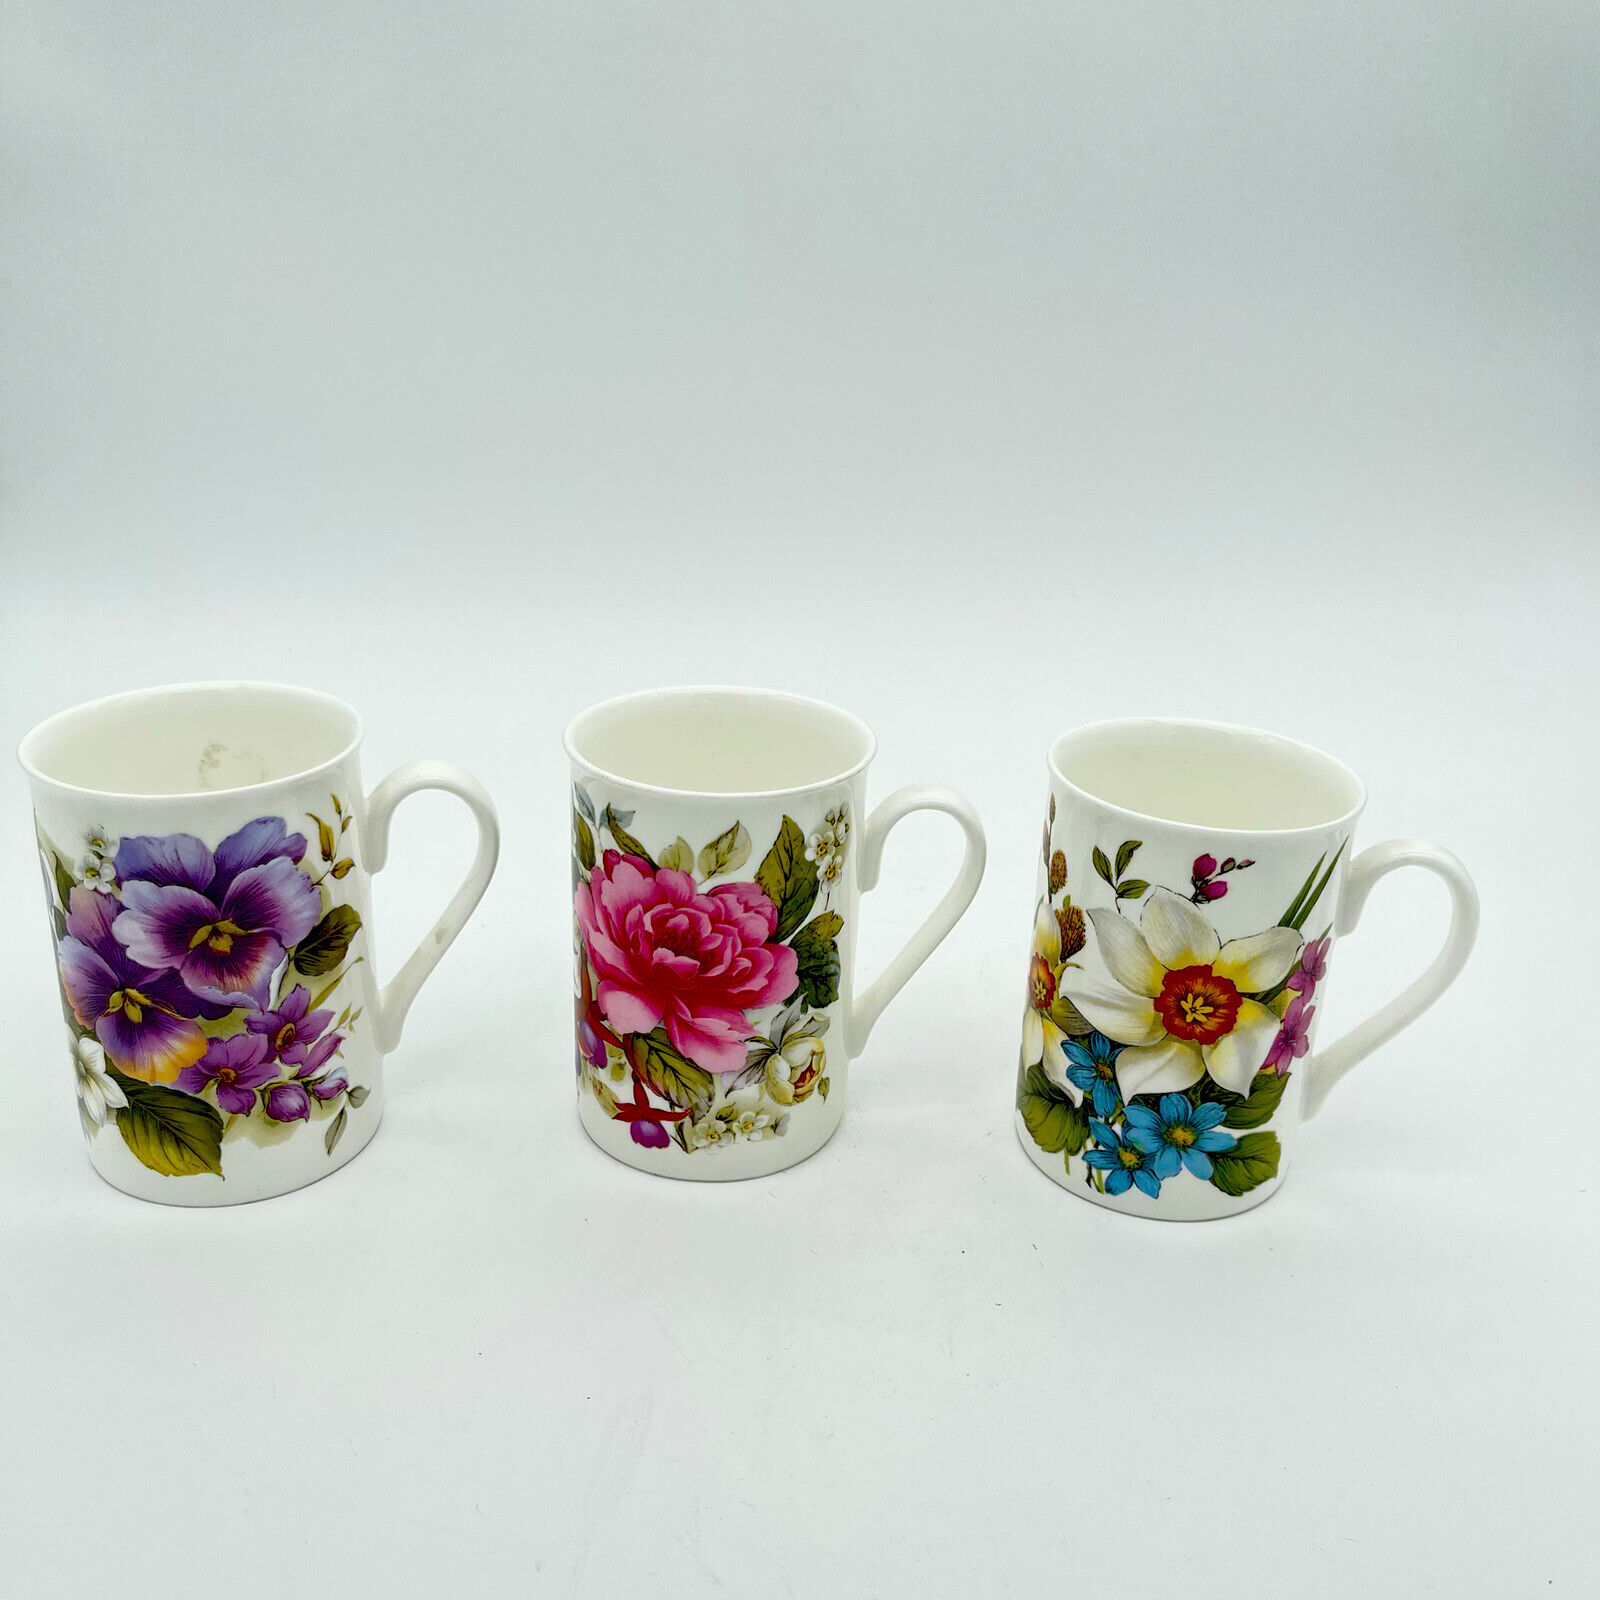 3 Rare Royale Garden Colorful Floral Mug Bone China Staffordshire Engla Romania